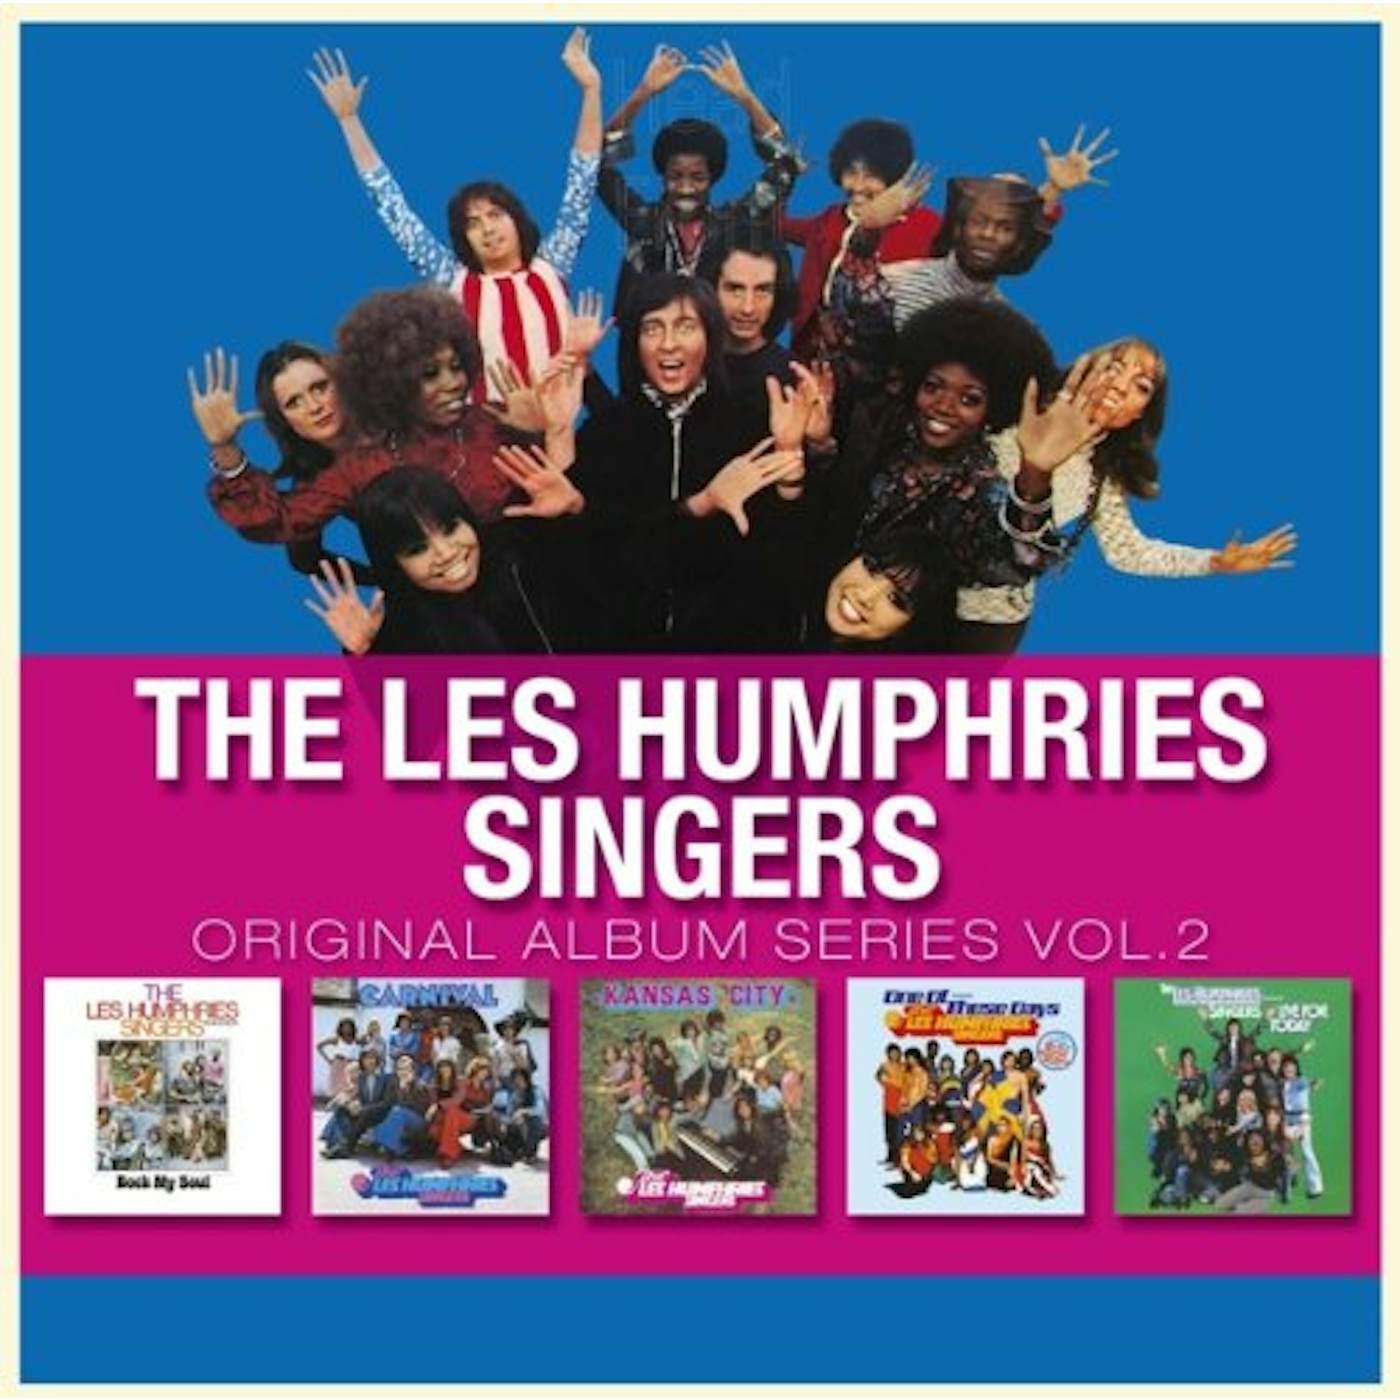 Les Humphries Singers VOL. 2 ORIGINAL ALBUM SERIES CD